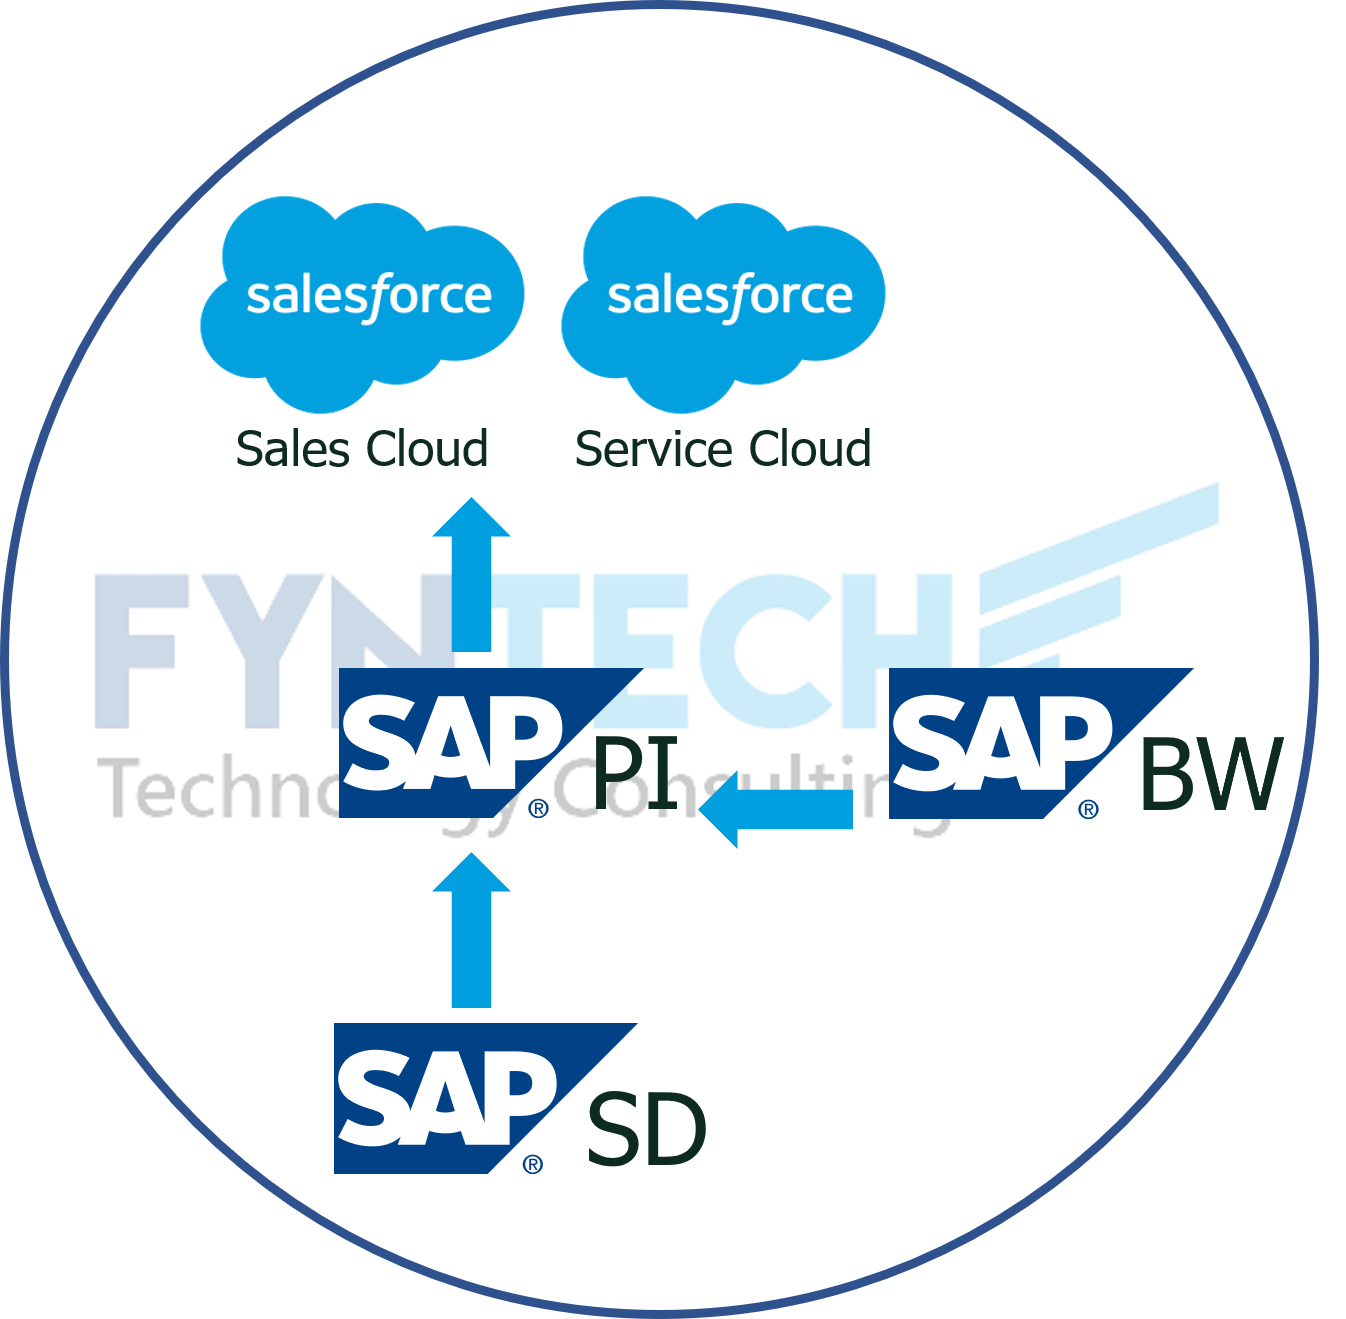 Referenz SAP Salesforce Integration SAP SD SAP PI SAP BW Sales Cloud Service Cloud